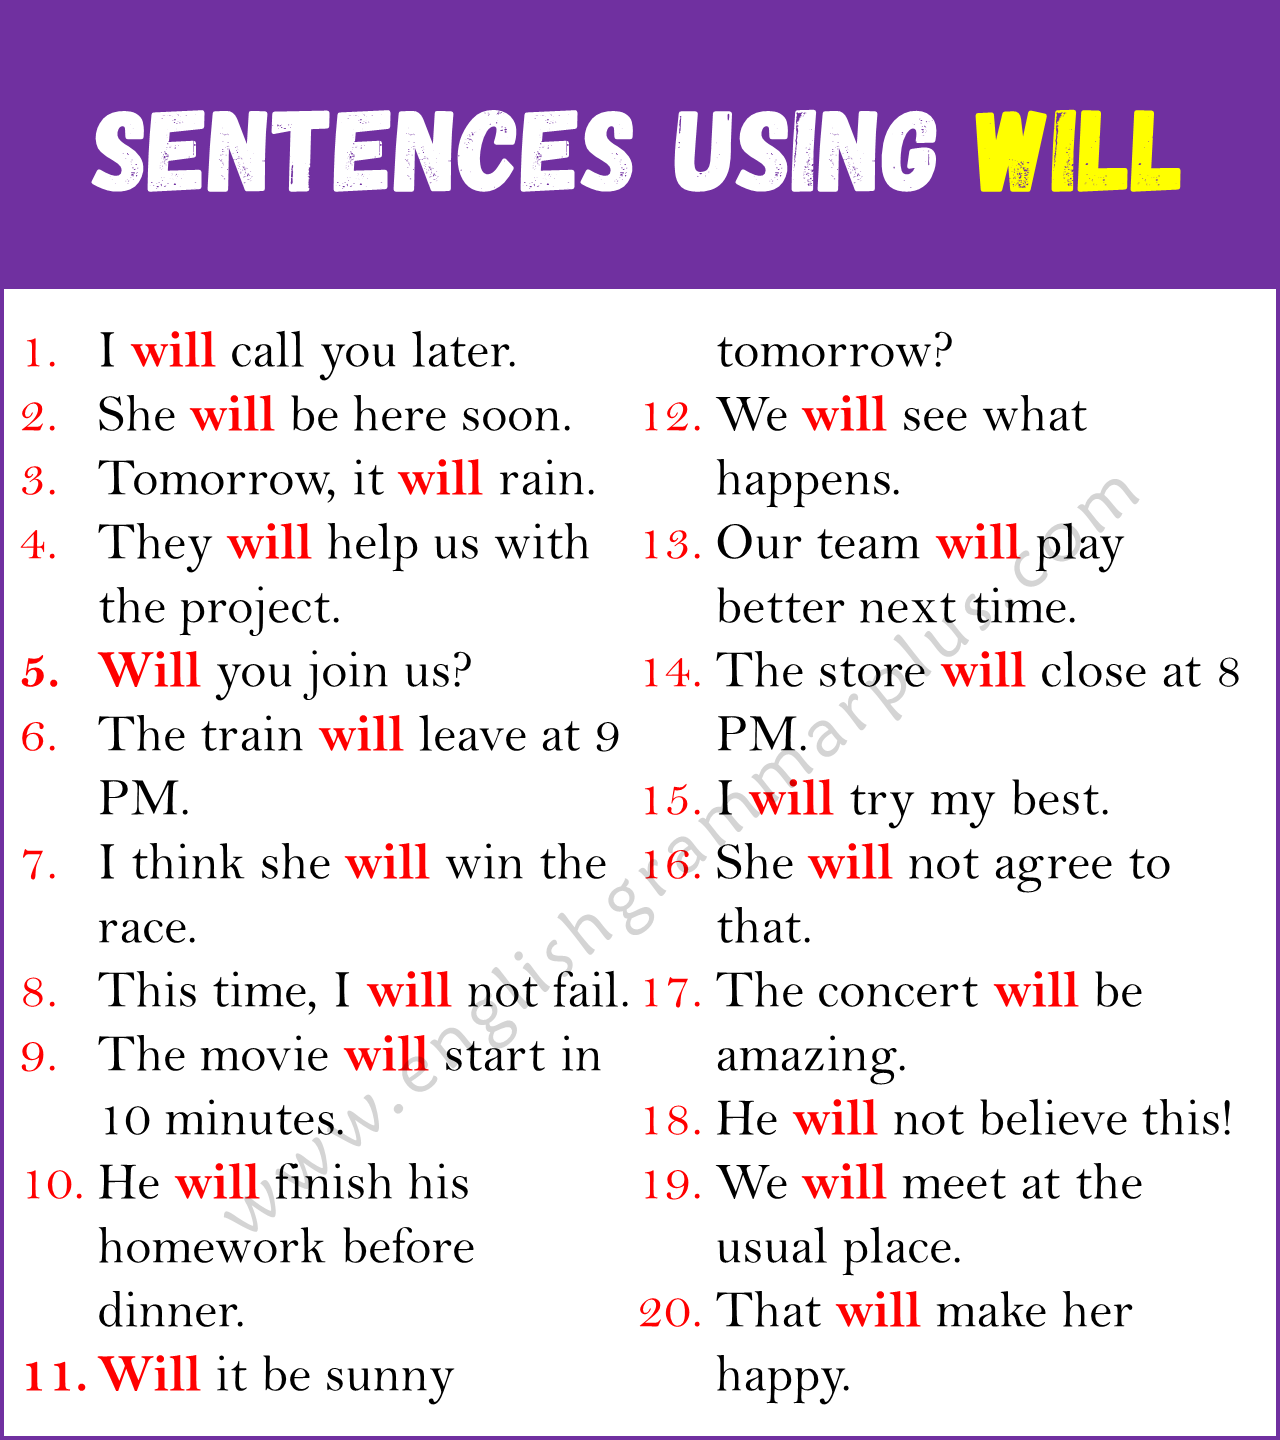 Sentences Using WILL